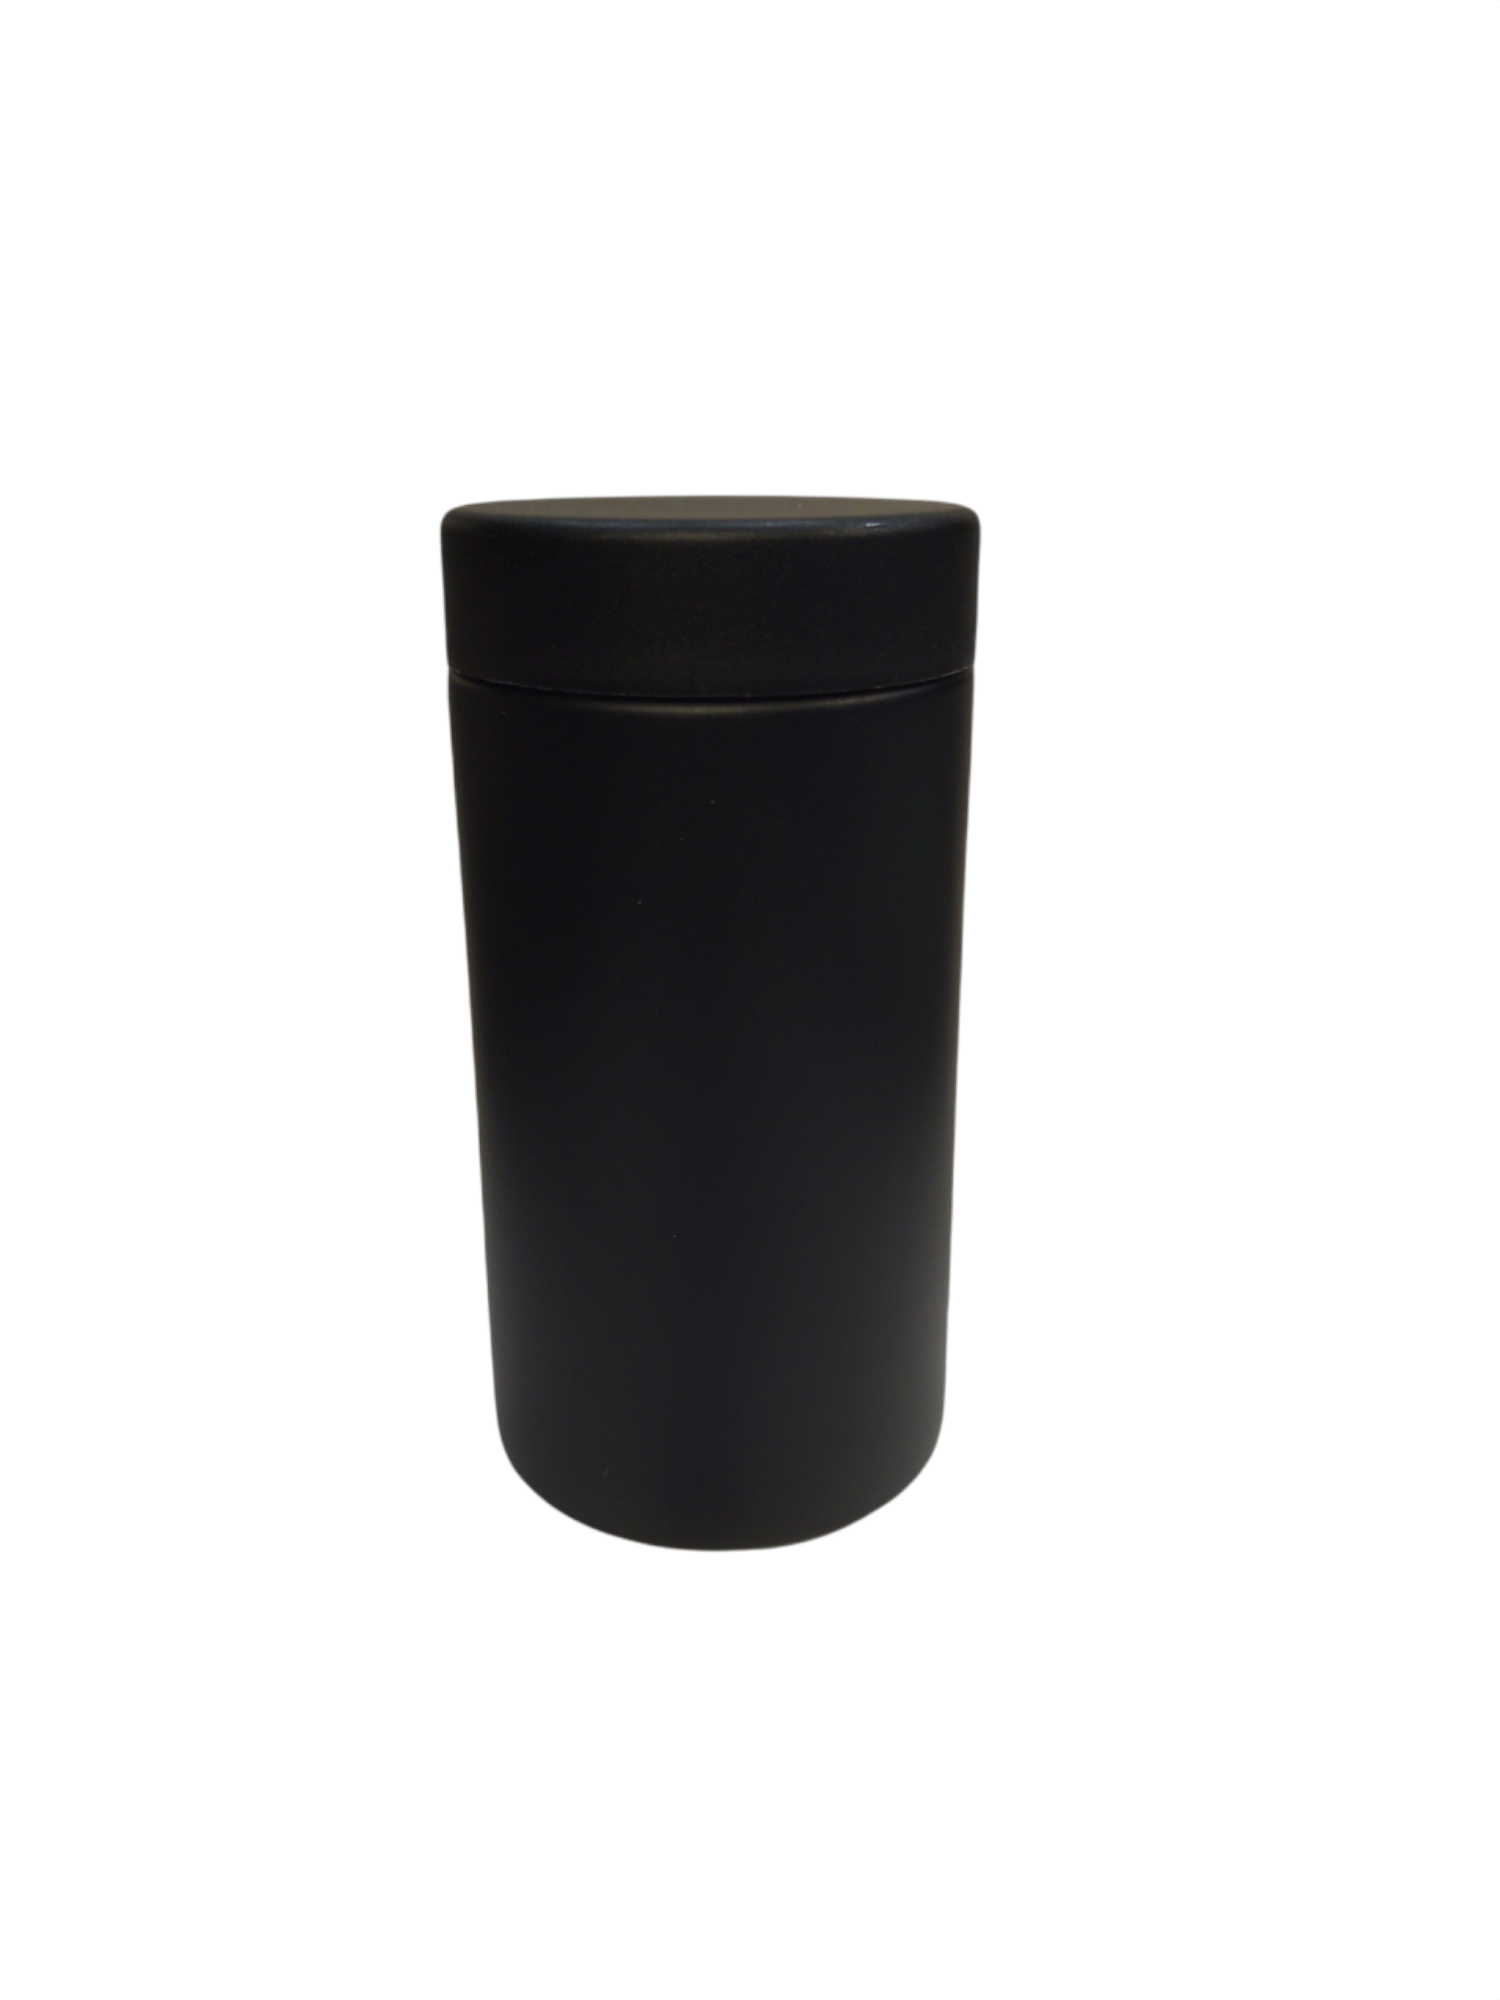 10 oz Child Resistant Glass Jar | Matte Black Jar with Black Plastic Screw Lid | MJ Supply